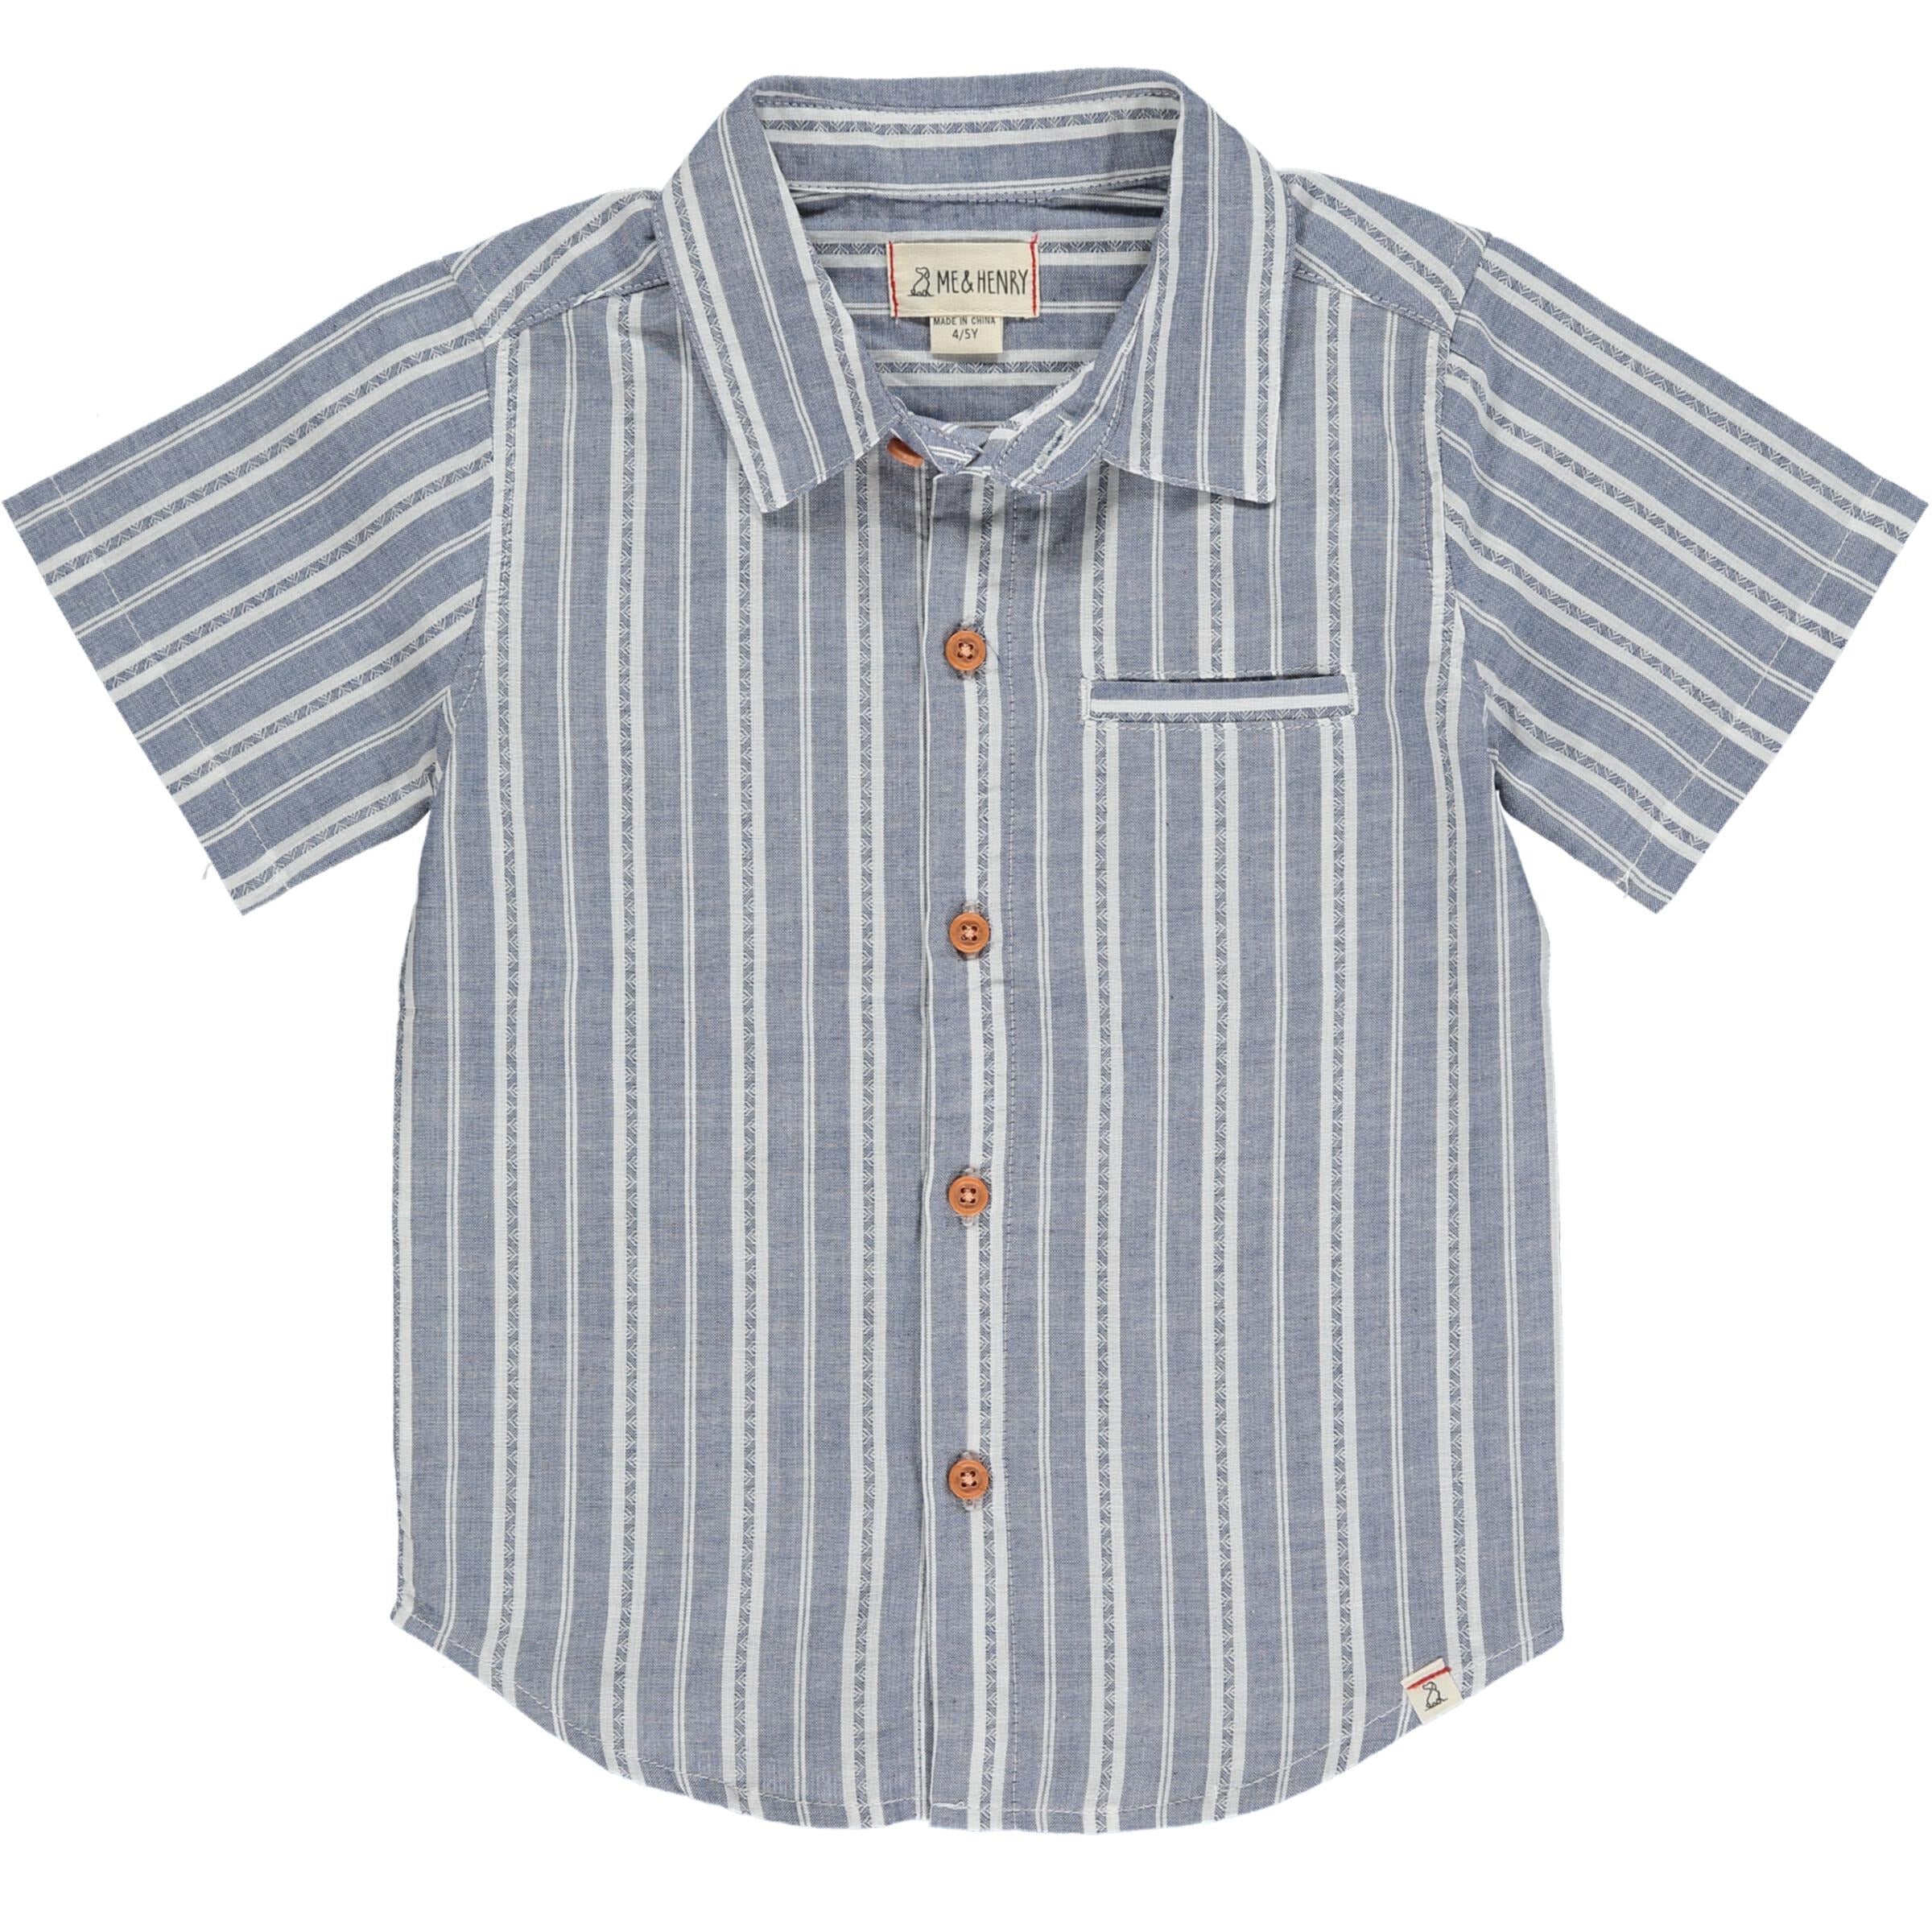 Newport Shirt - Woven Blue/White Stripe